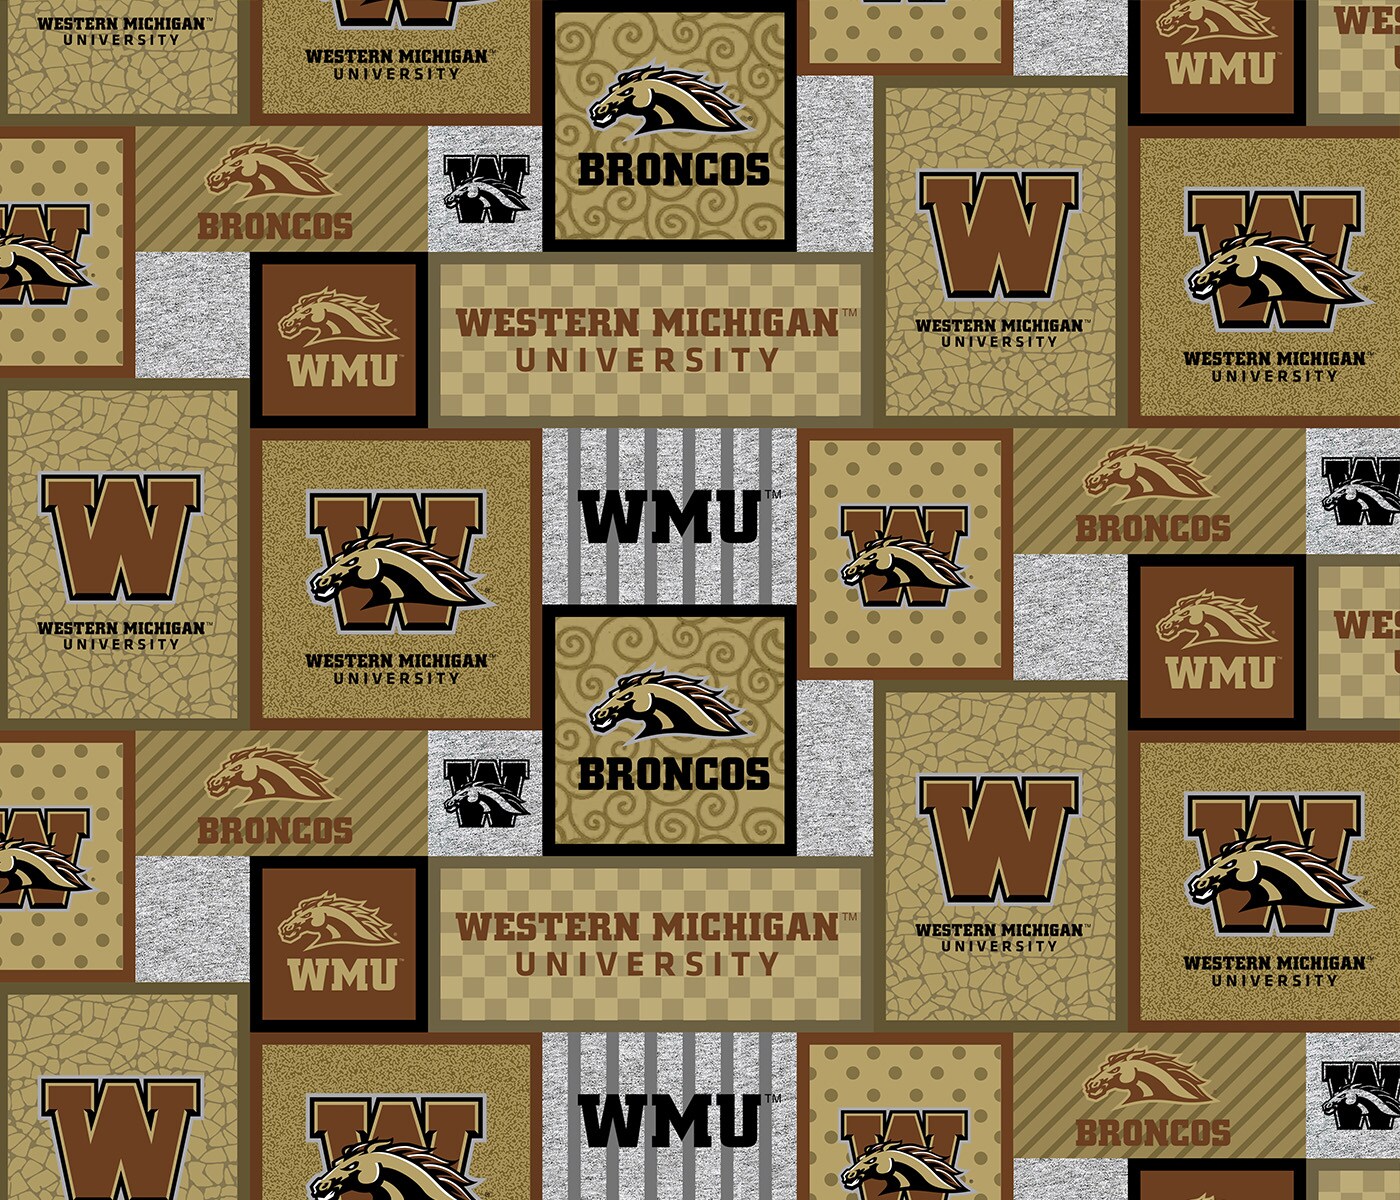 Sykel Enterprises-Western Michigan University Fleece Fabric-WMU Broncos College Patch Fleece Blanket Fabric-Sold by the yard